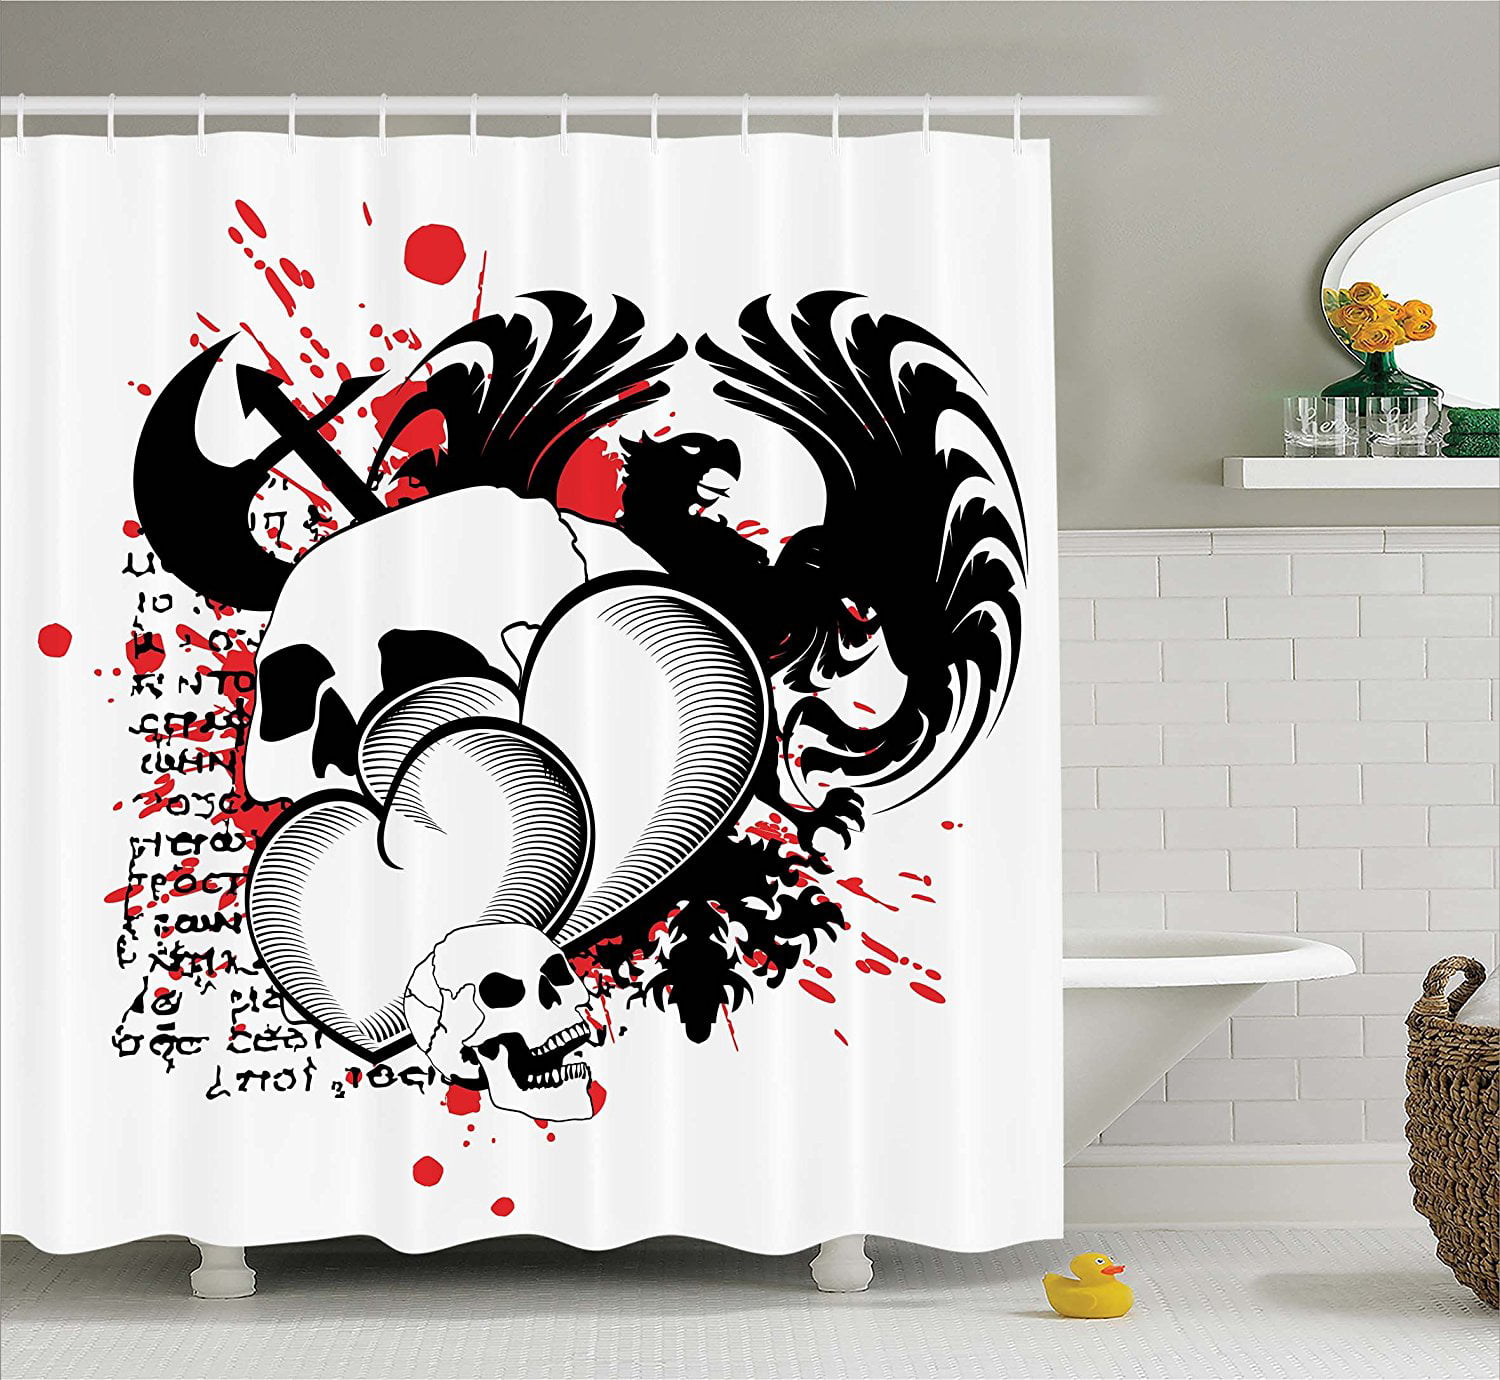 Mechanic Tattoo Girl Shower curtain Liner Polyester Fabrice Bathroom Mat Set 